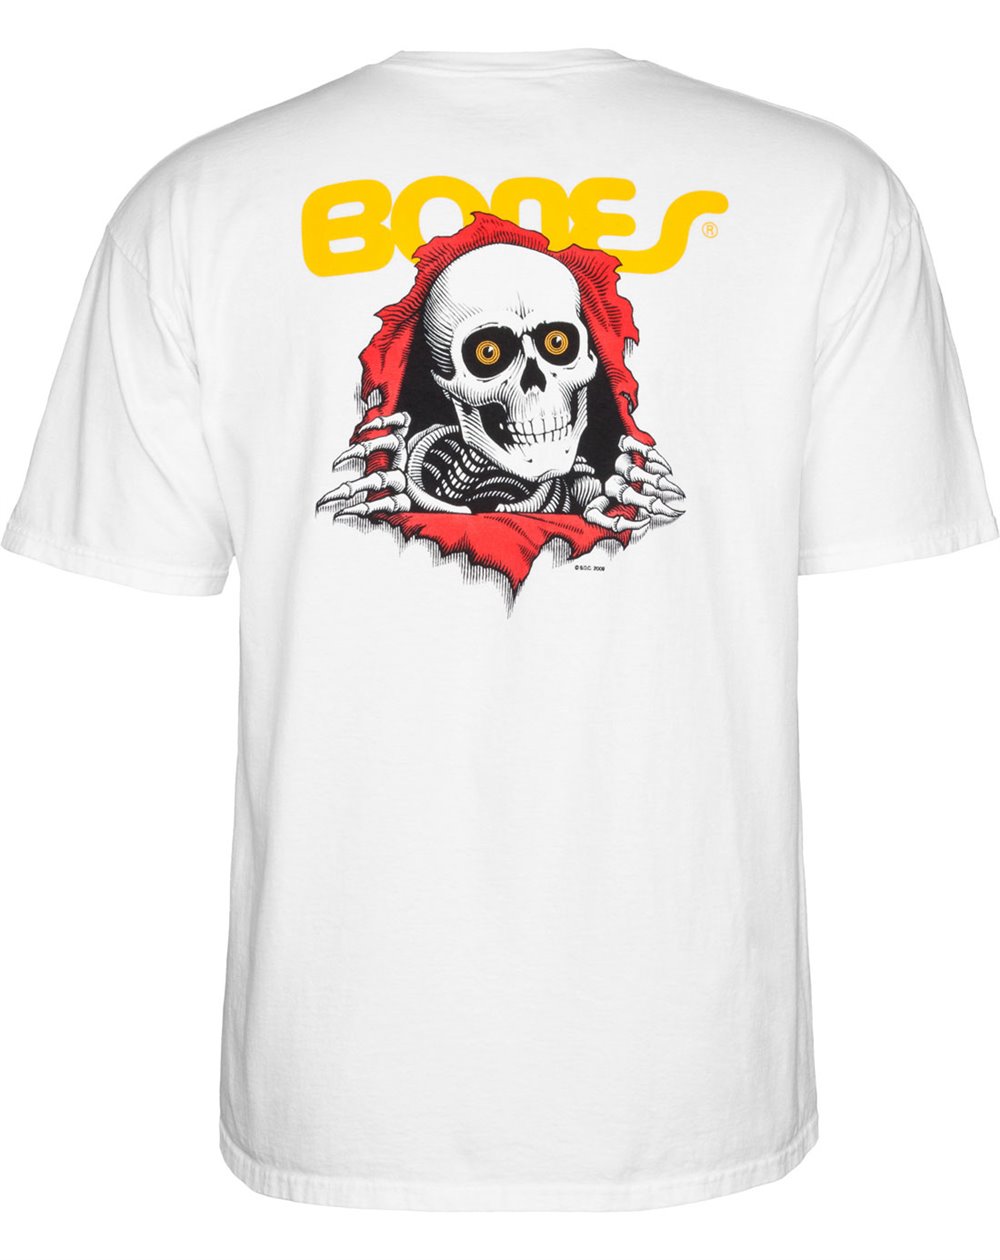 Powell Peralta T-Shirt Uomo Ripper (White)